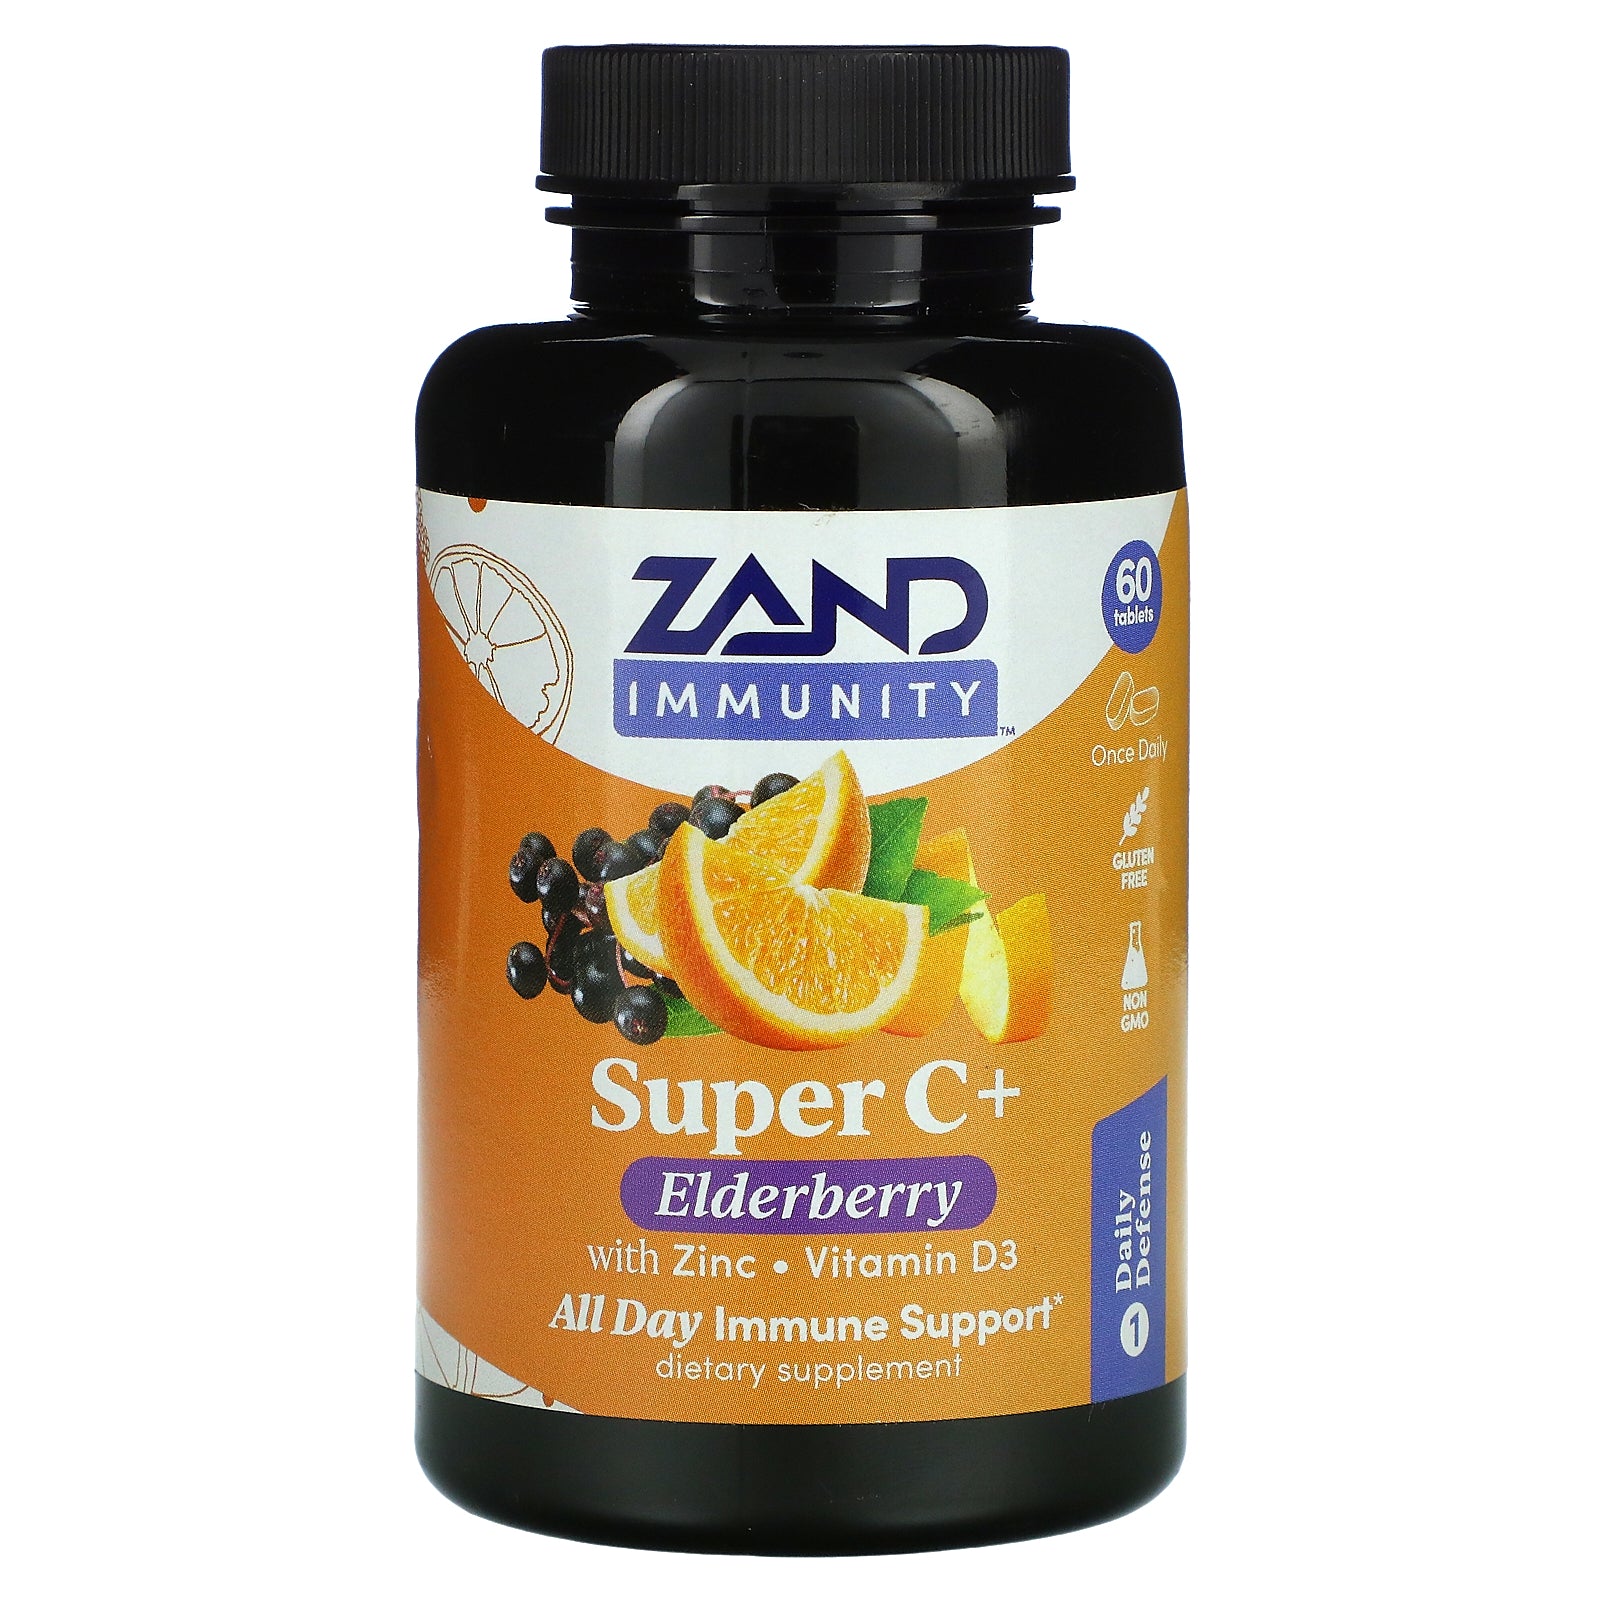 Zand, Immunity, Super C+ Elderberry with Zinc/Vitamin D3 Tablets